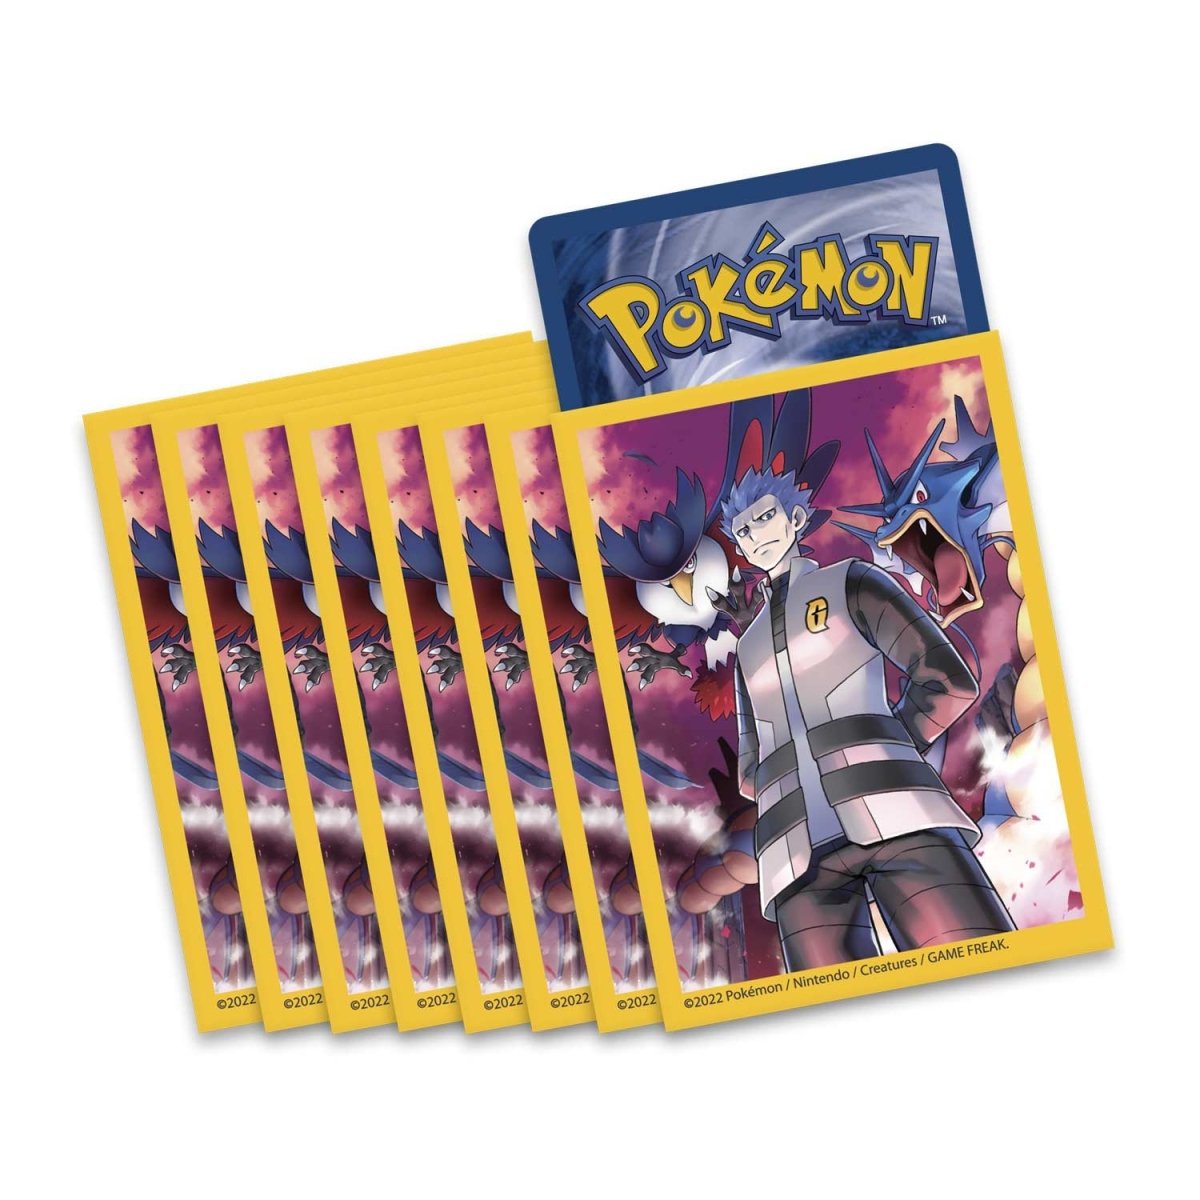 Pokémon: Cyrus Premium Tournament Collection